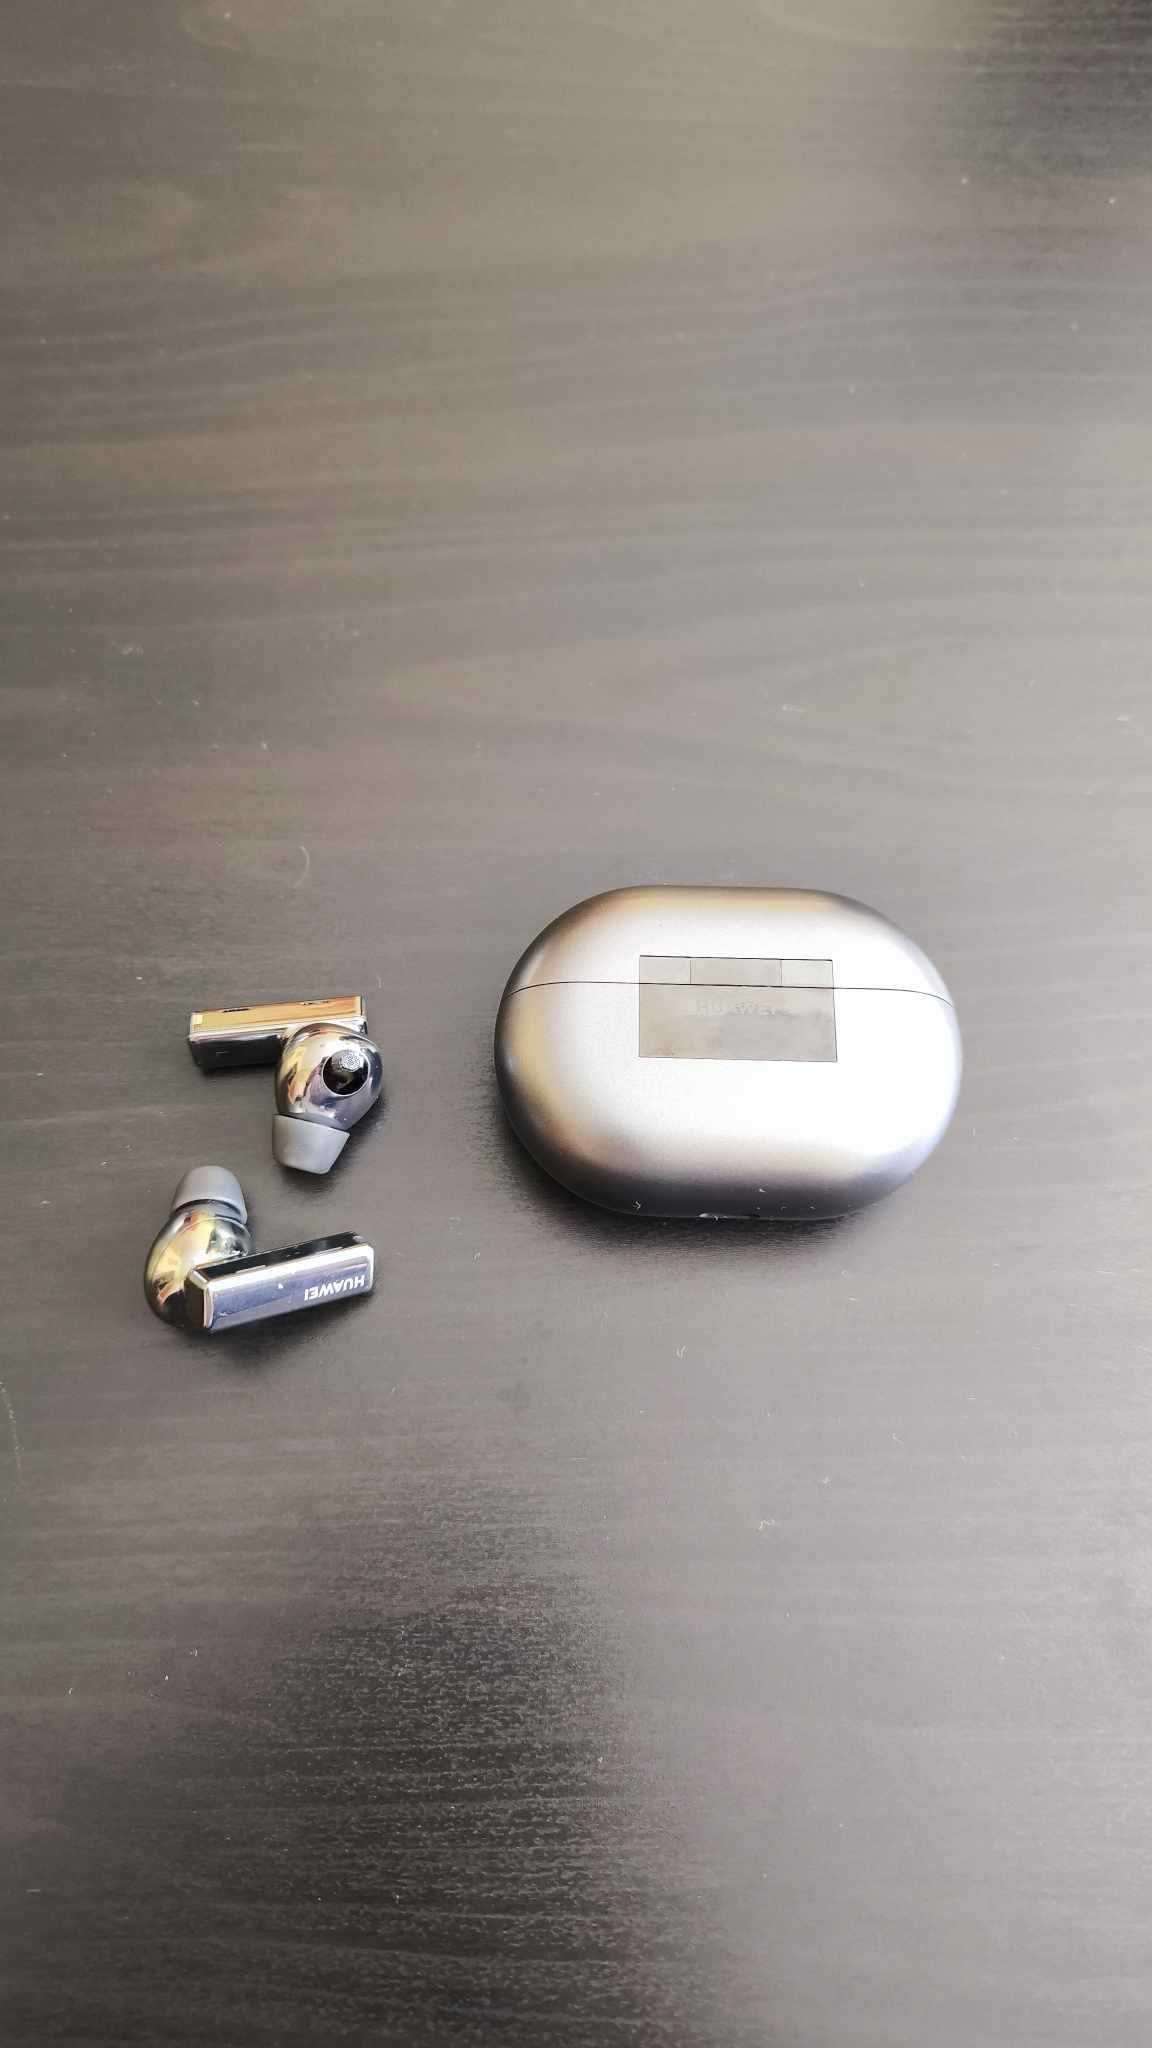 Huawei FreeBuds Pro Słuchawki srebrne